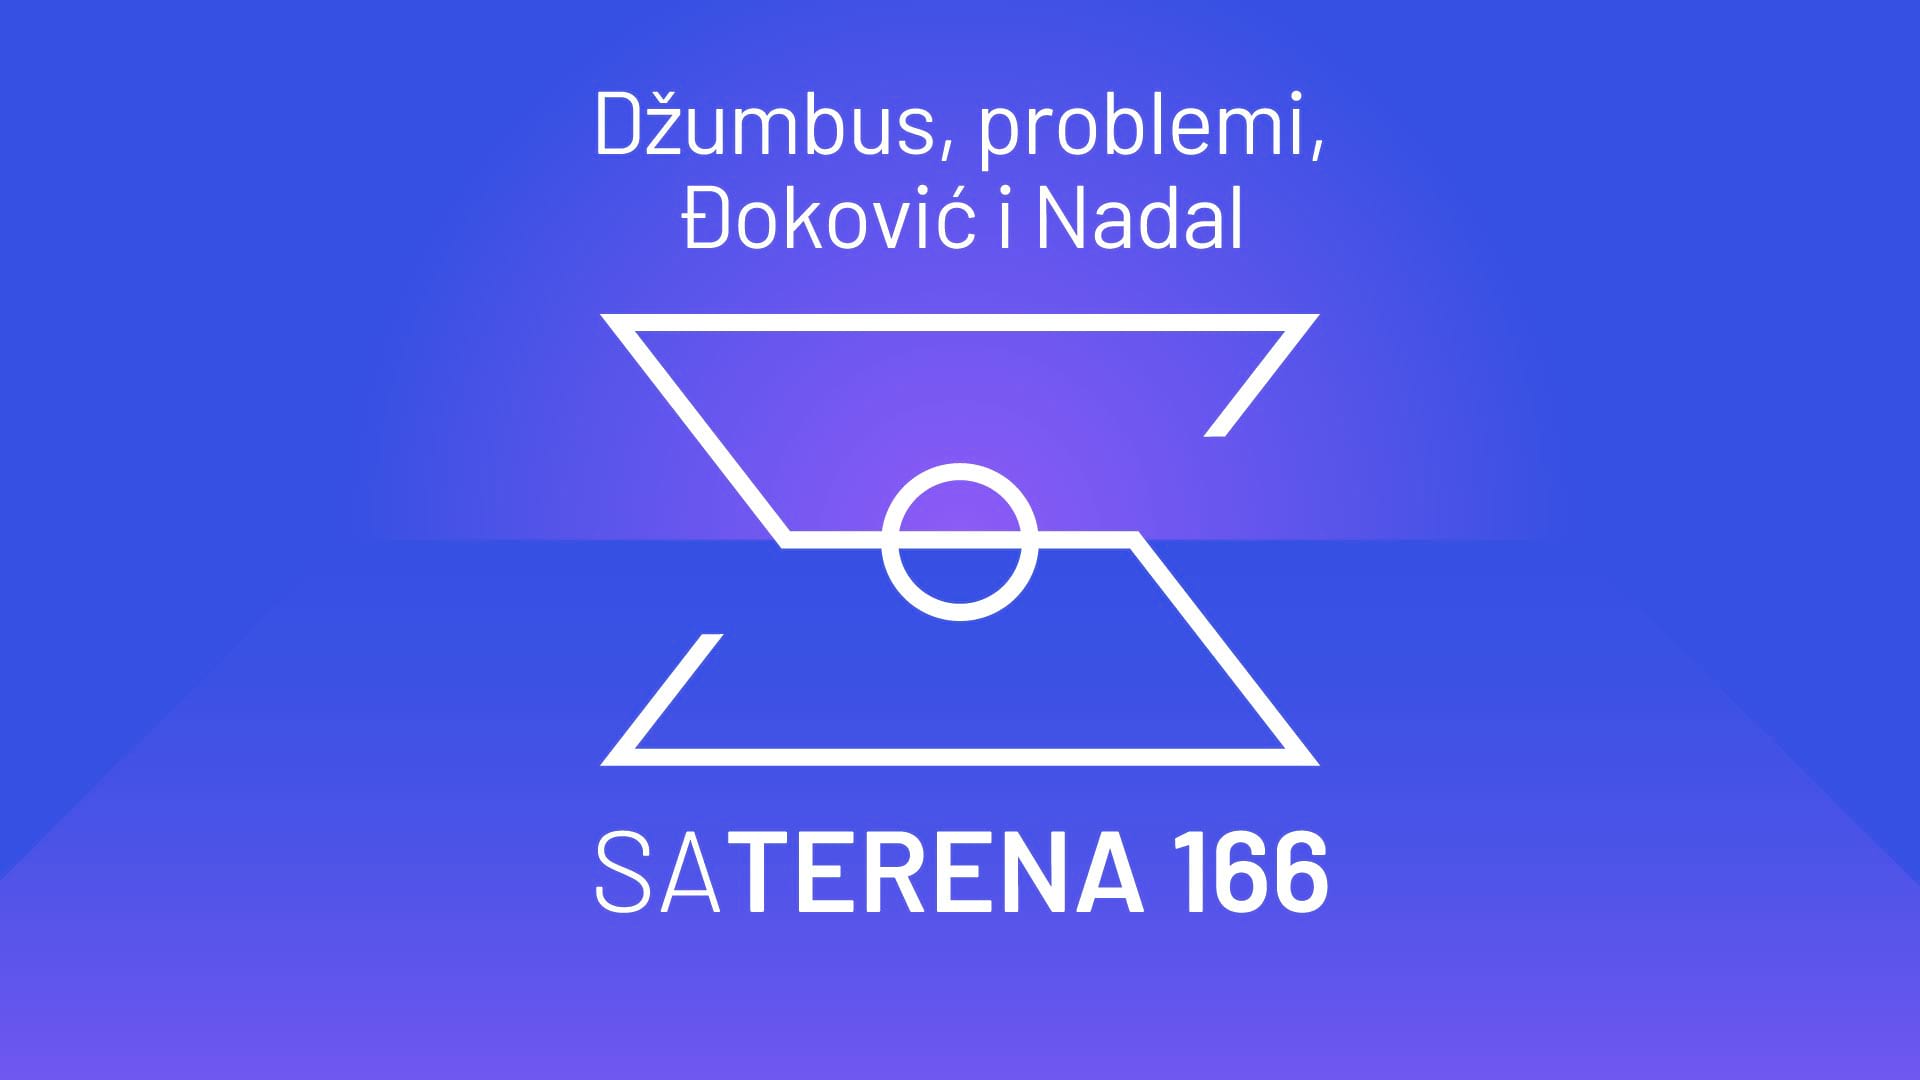 Sa terena 166: Džumbus, problemi, Đoković i Nadal